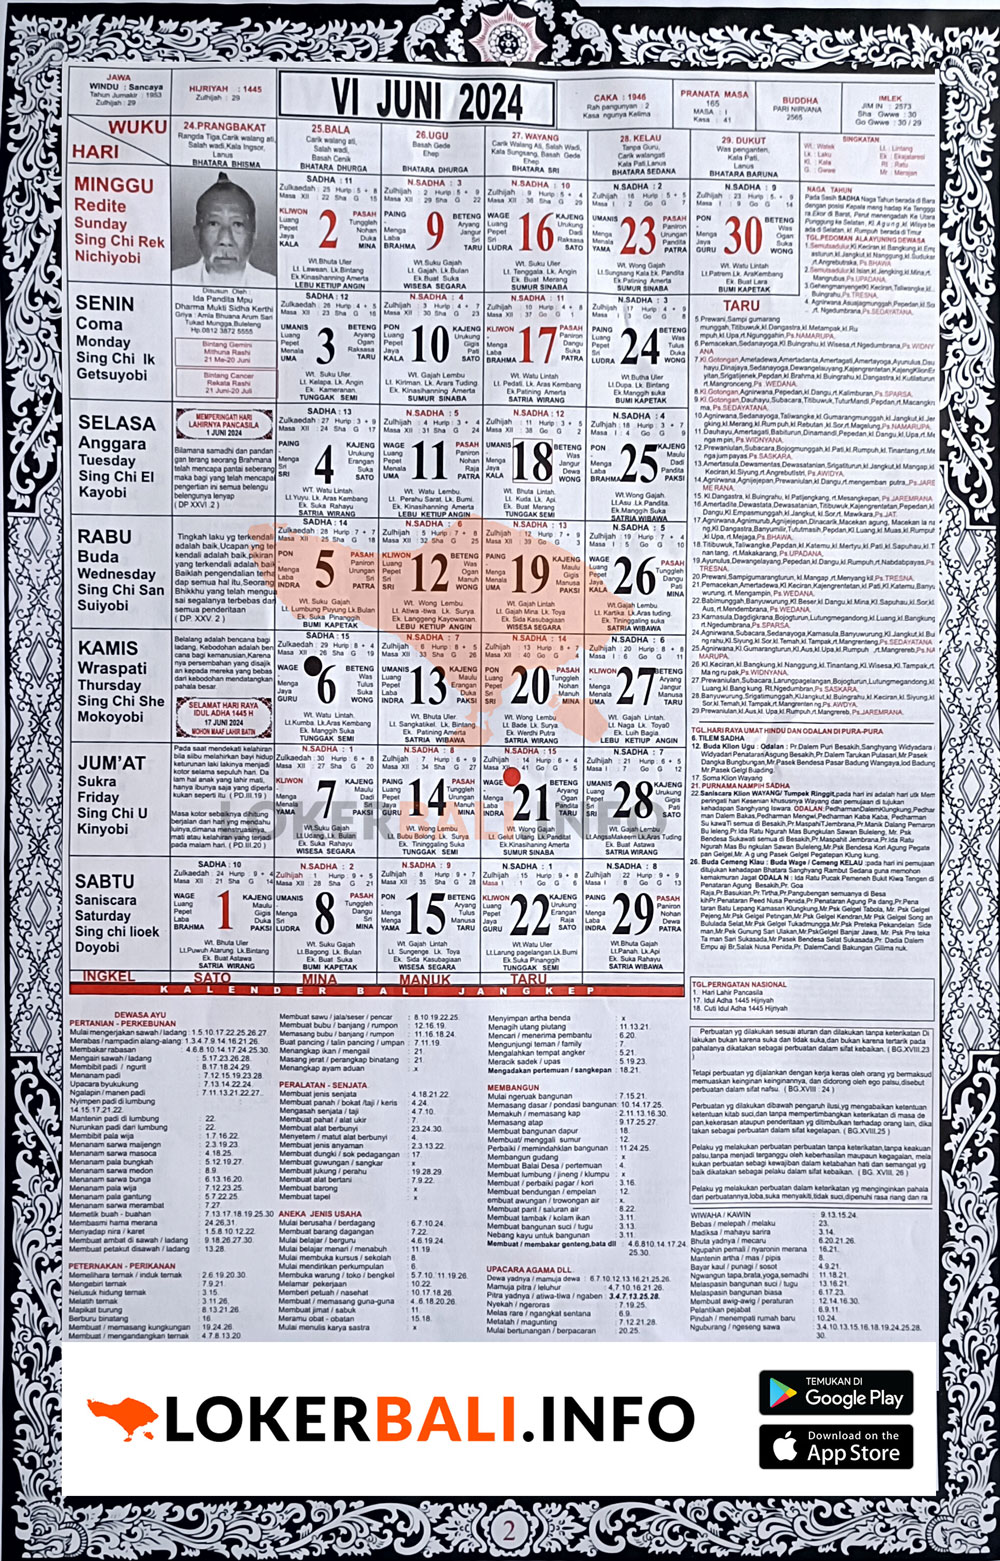 Kalender Juni 2024